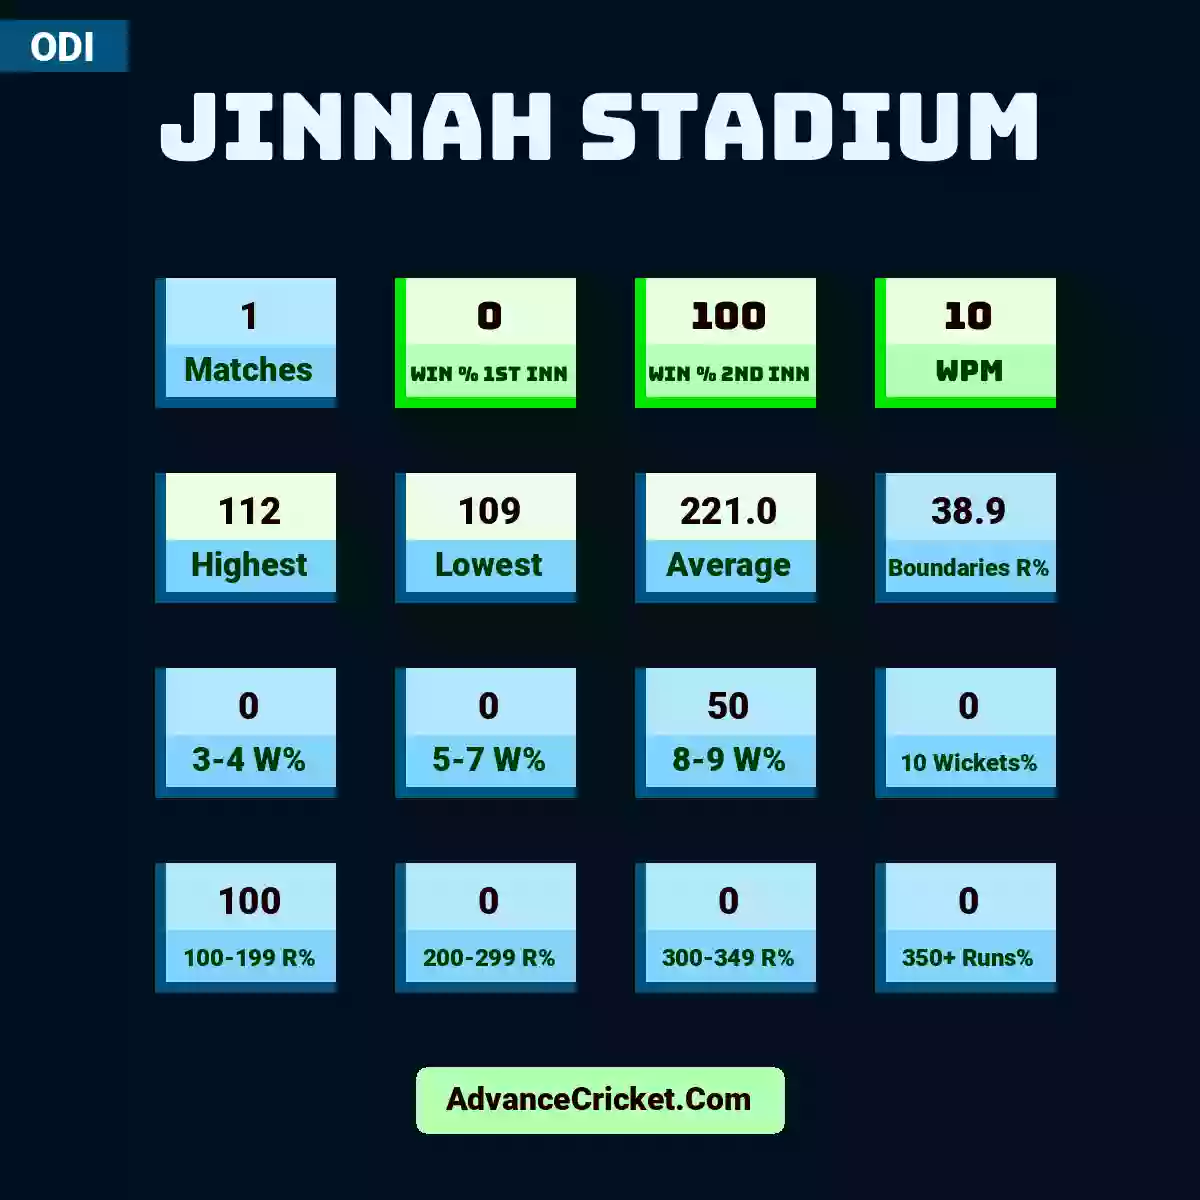 Image showing Jinnah Stadium with Matches: 1, Win % 1st Inn: 0, Win % 2nd Inn: 100, WPM: 10, Highest: 112, Lowest: 109, Average: 221.0, Boundaries R%: 38.9, 3-4 W%: 0, 5-7 W%: 0, 8-9 W%: 50, 10 Wickets%: 0, 100-199 R%: 100, 200-299 R%: 0, 300-349 R%: 0, 350+ Runs%: 0.